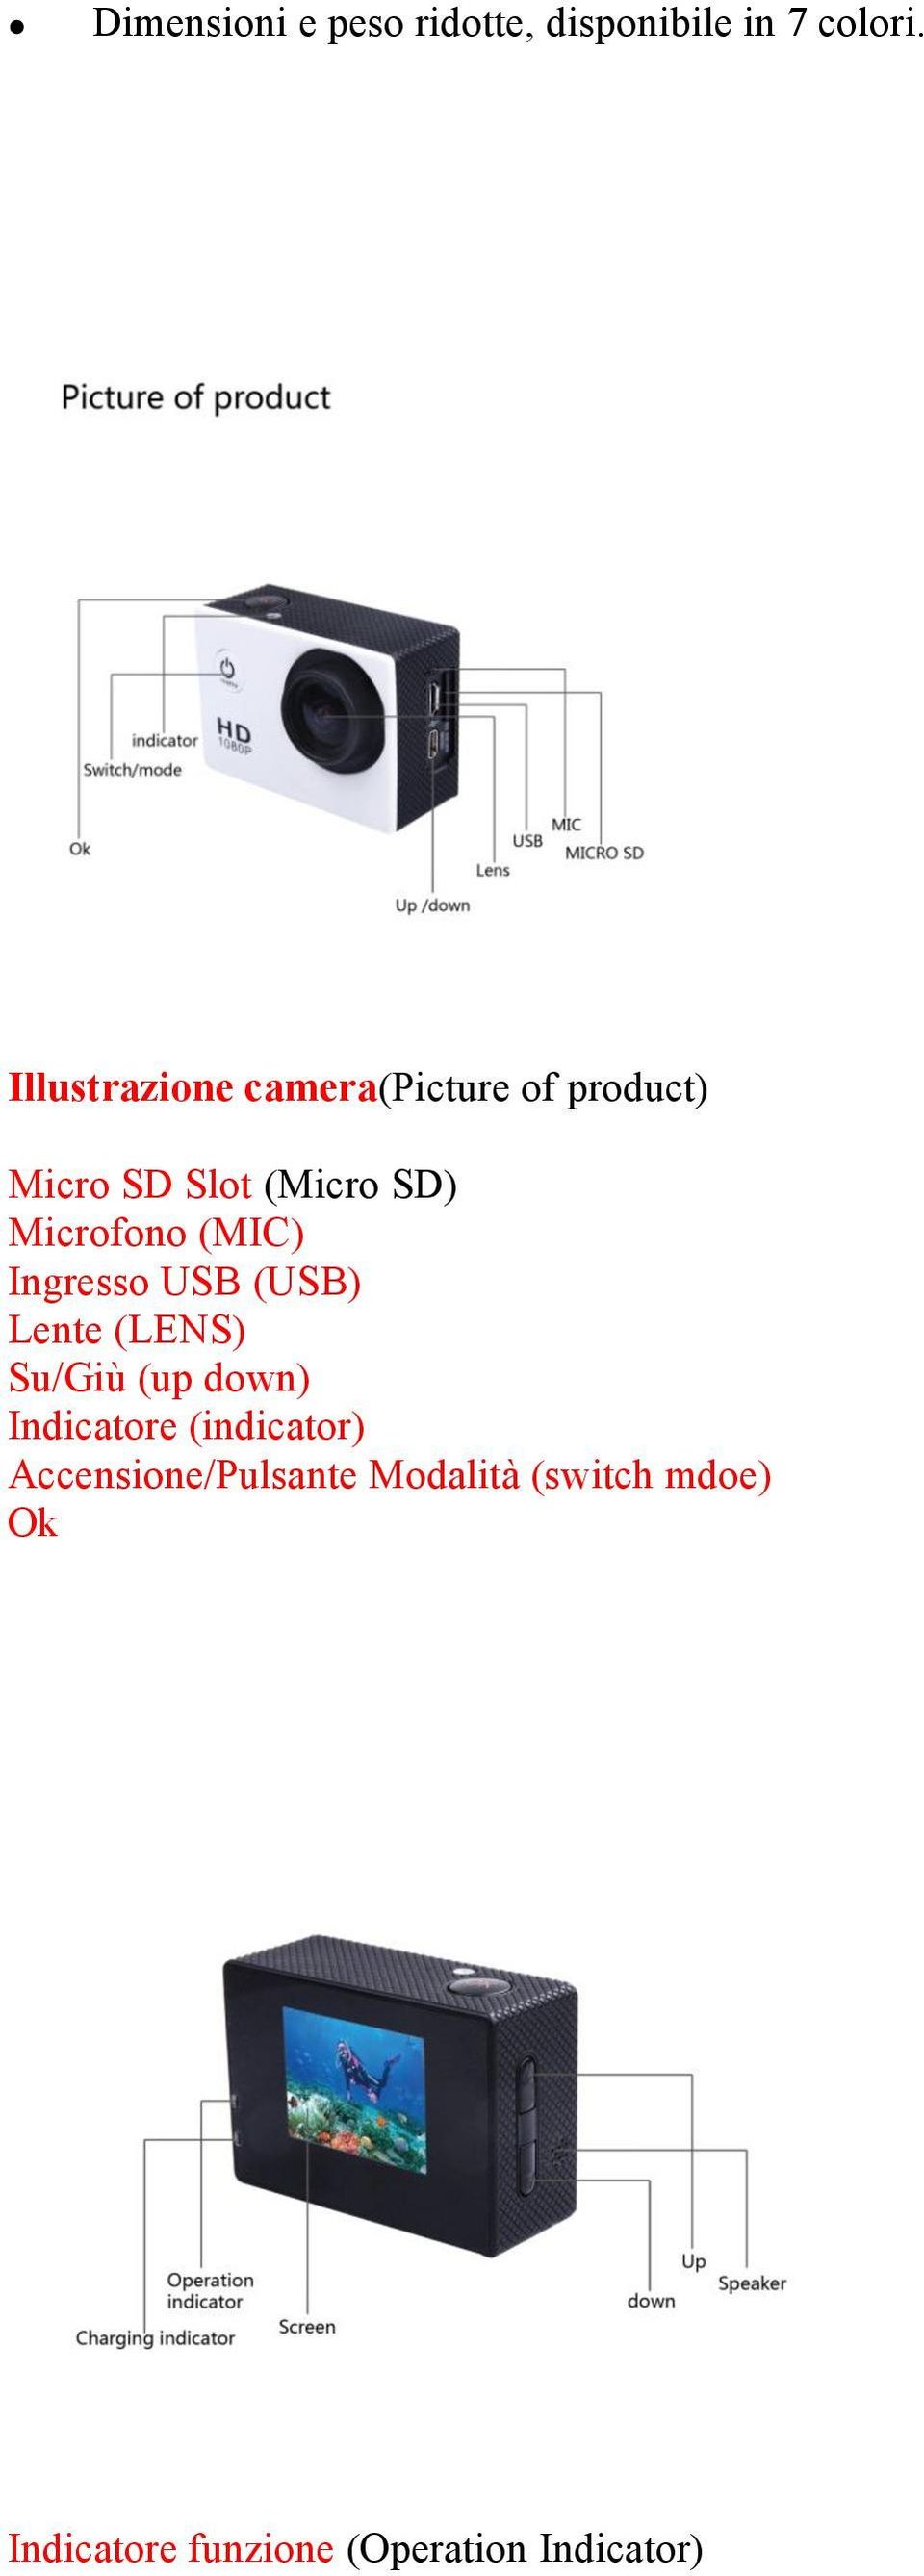 Microfono (MIC) Ingresso USB (USB) Lente (LENS) Su/Giù (up down)